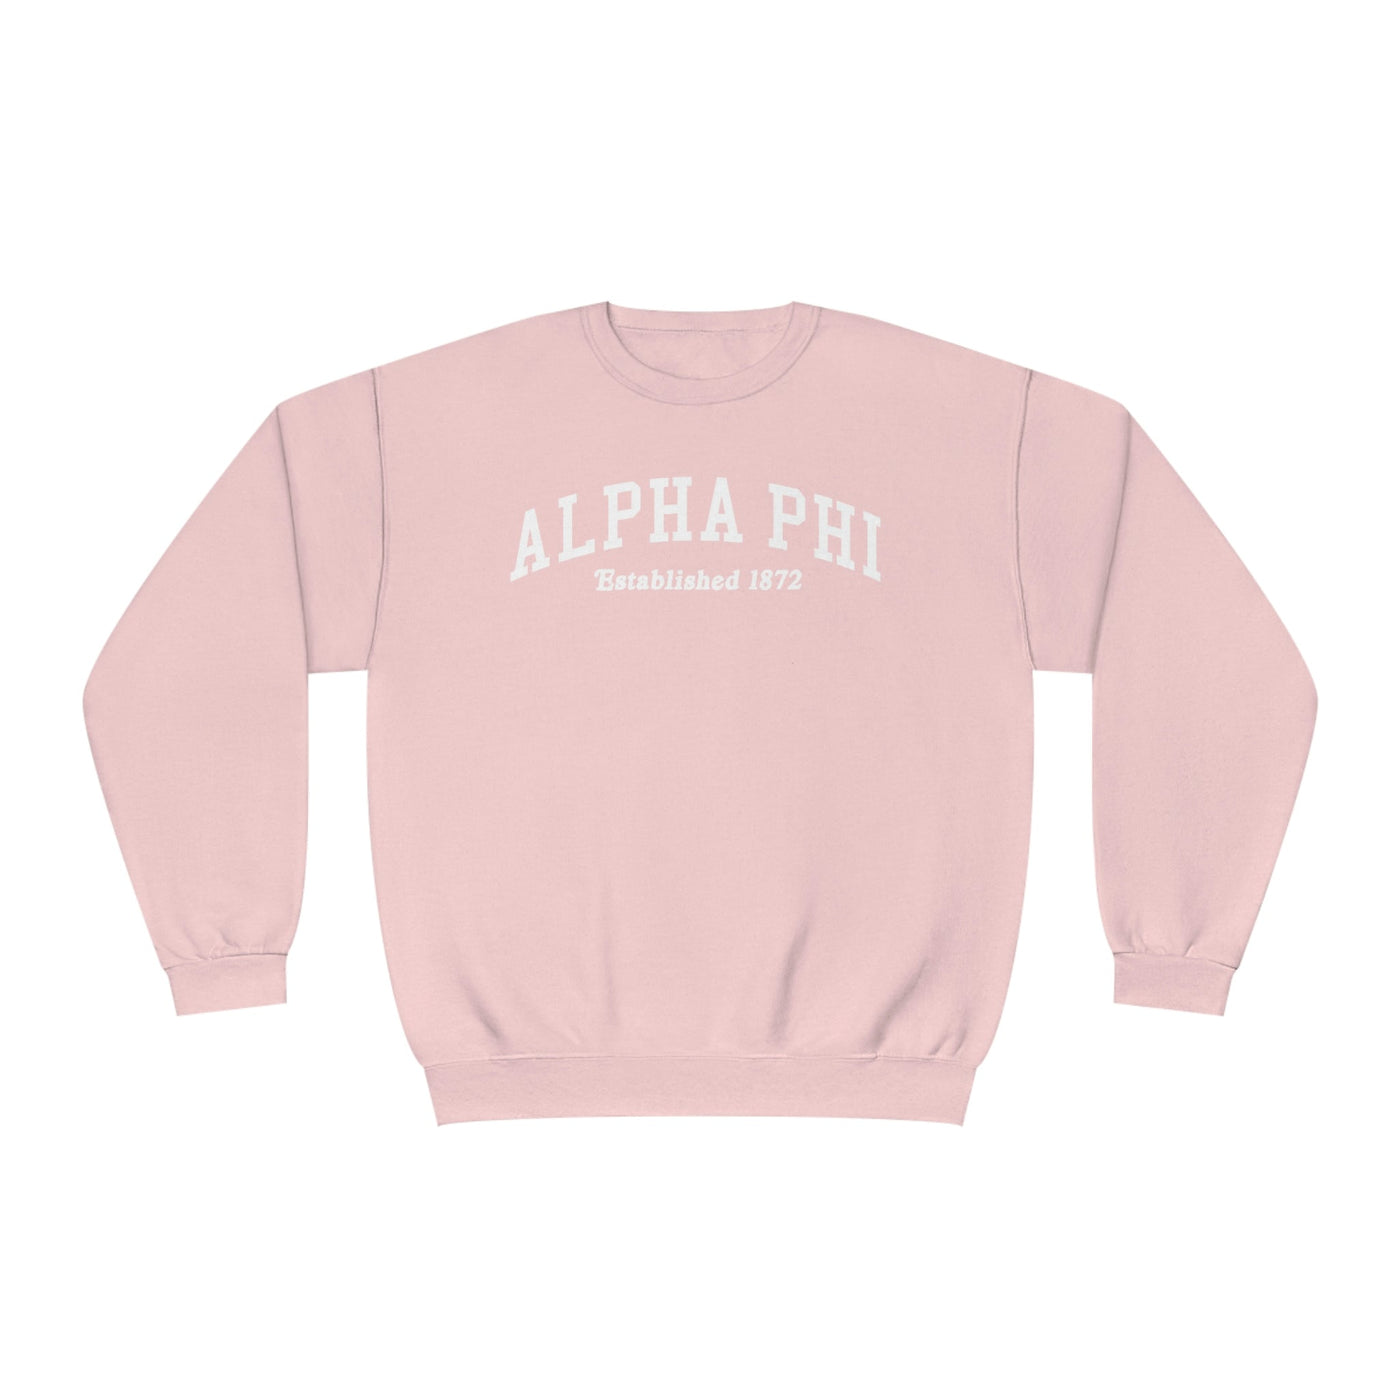 Alpha Phi Sorority Varsity College APhi Crewneck Sweatshirt